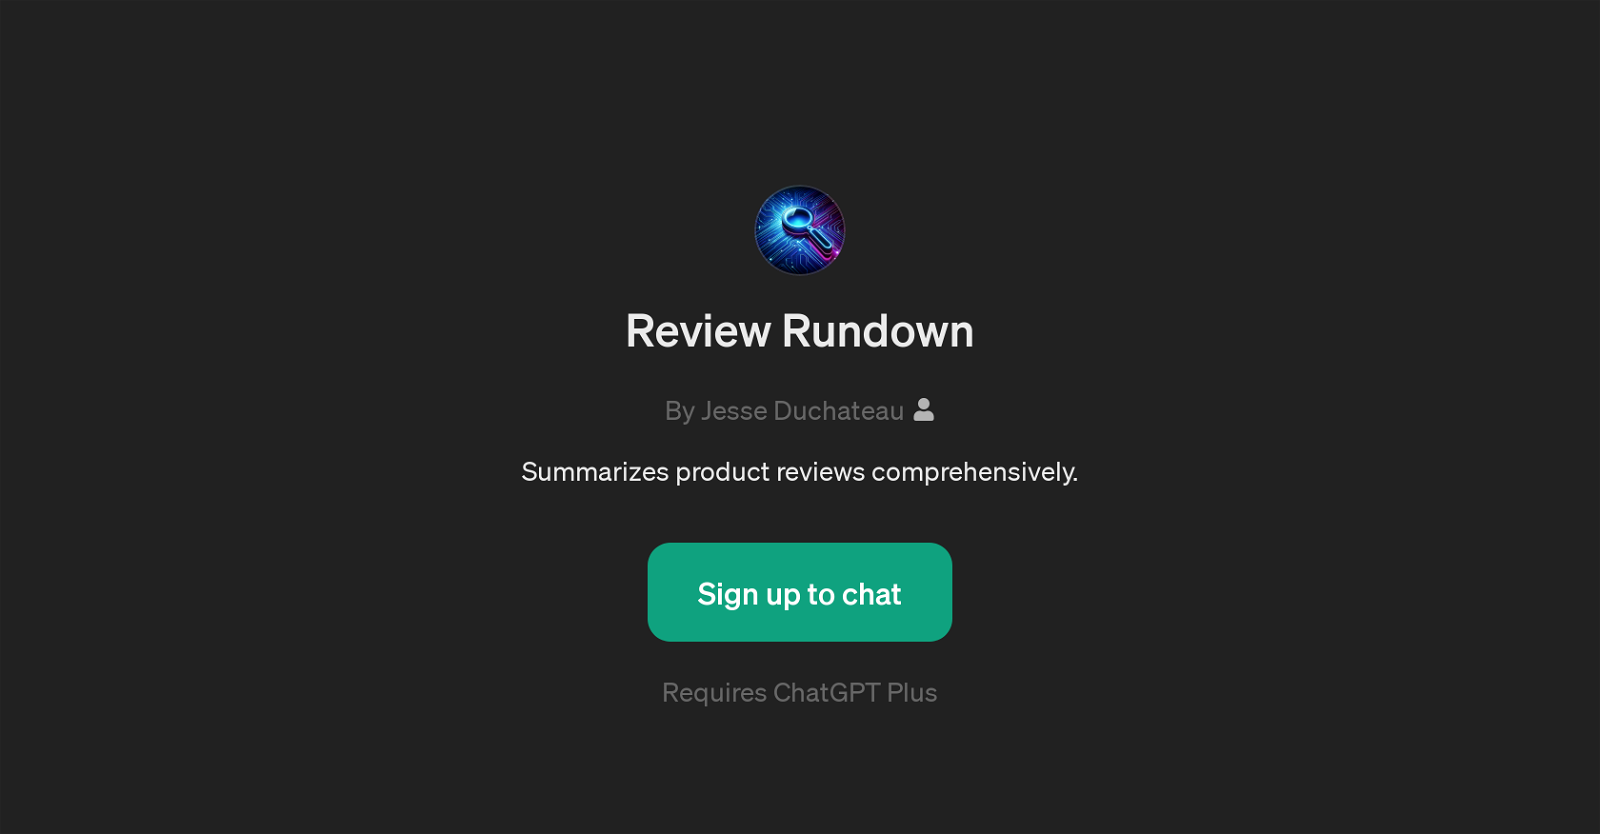 Review Rundown website